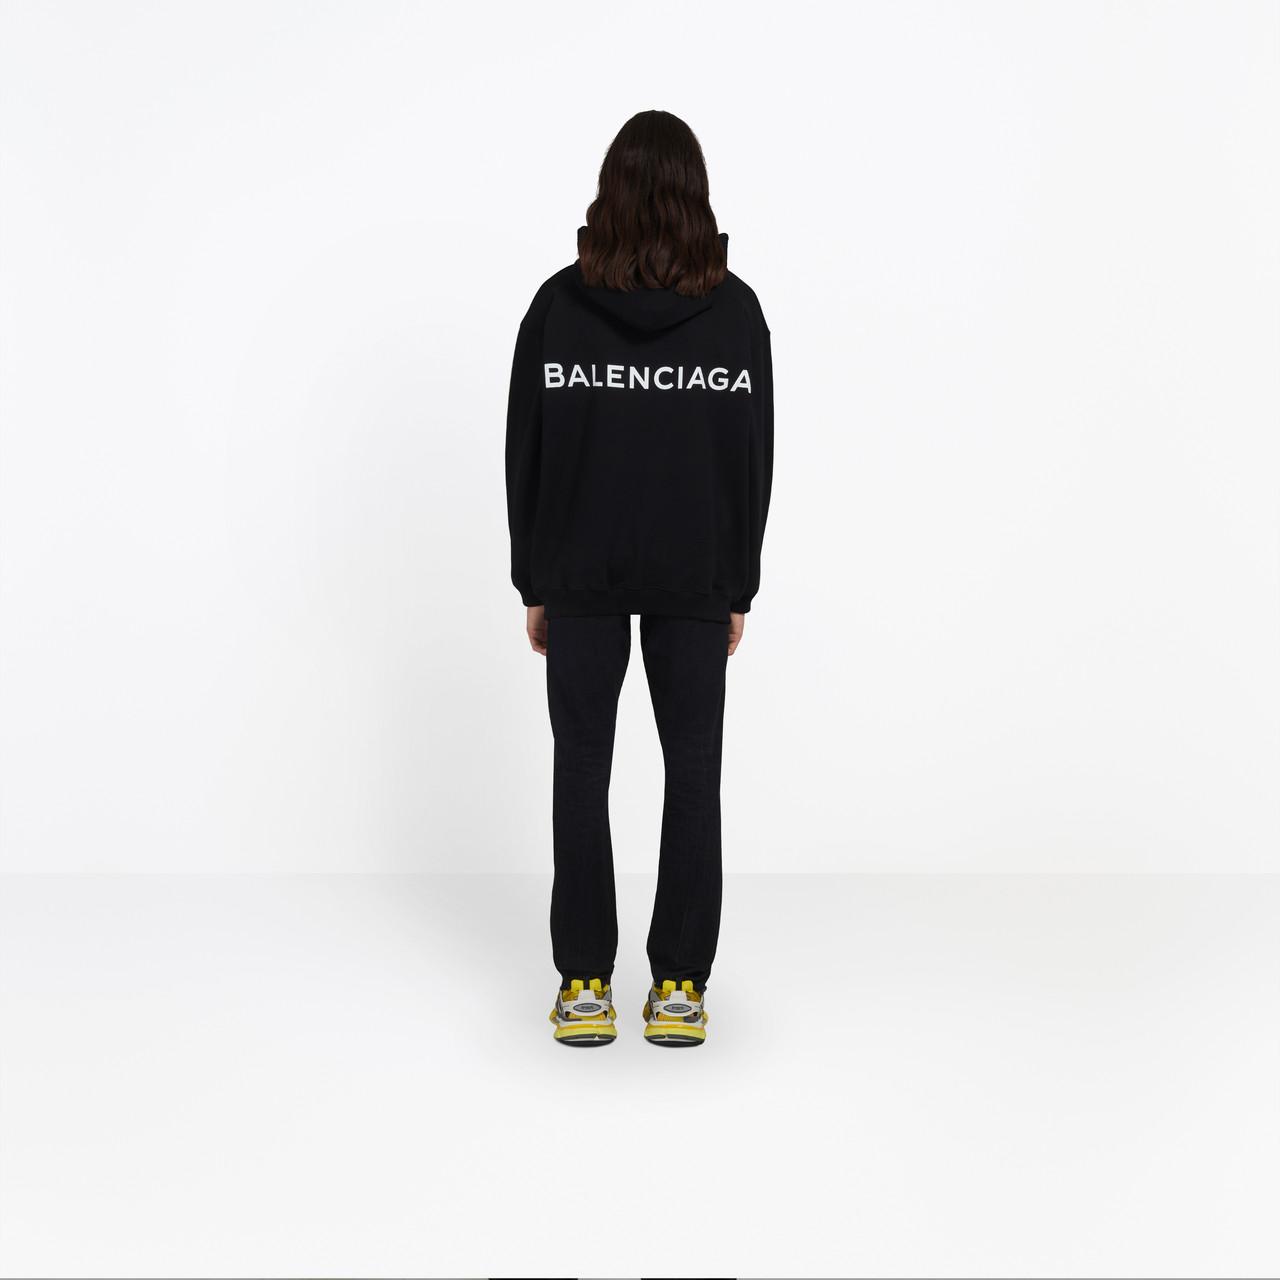 Antage kultur Beskæftiget Balenciaga Logo Hoodie Sweater in Black for Men - Lyst